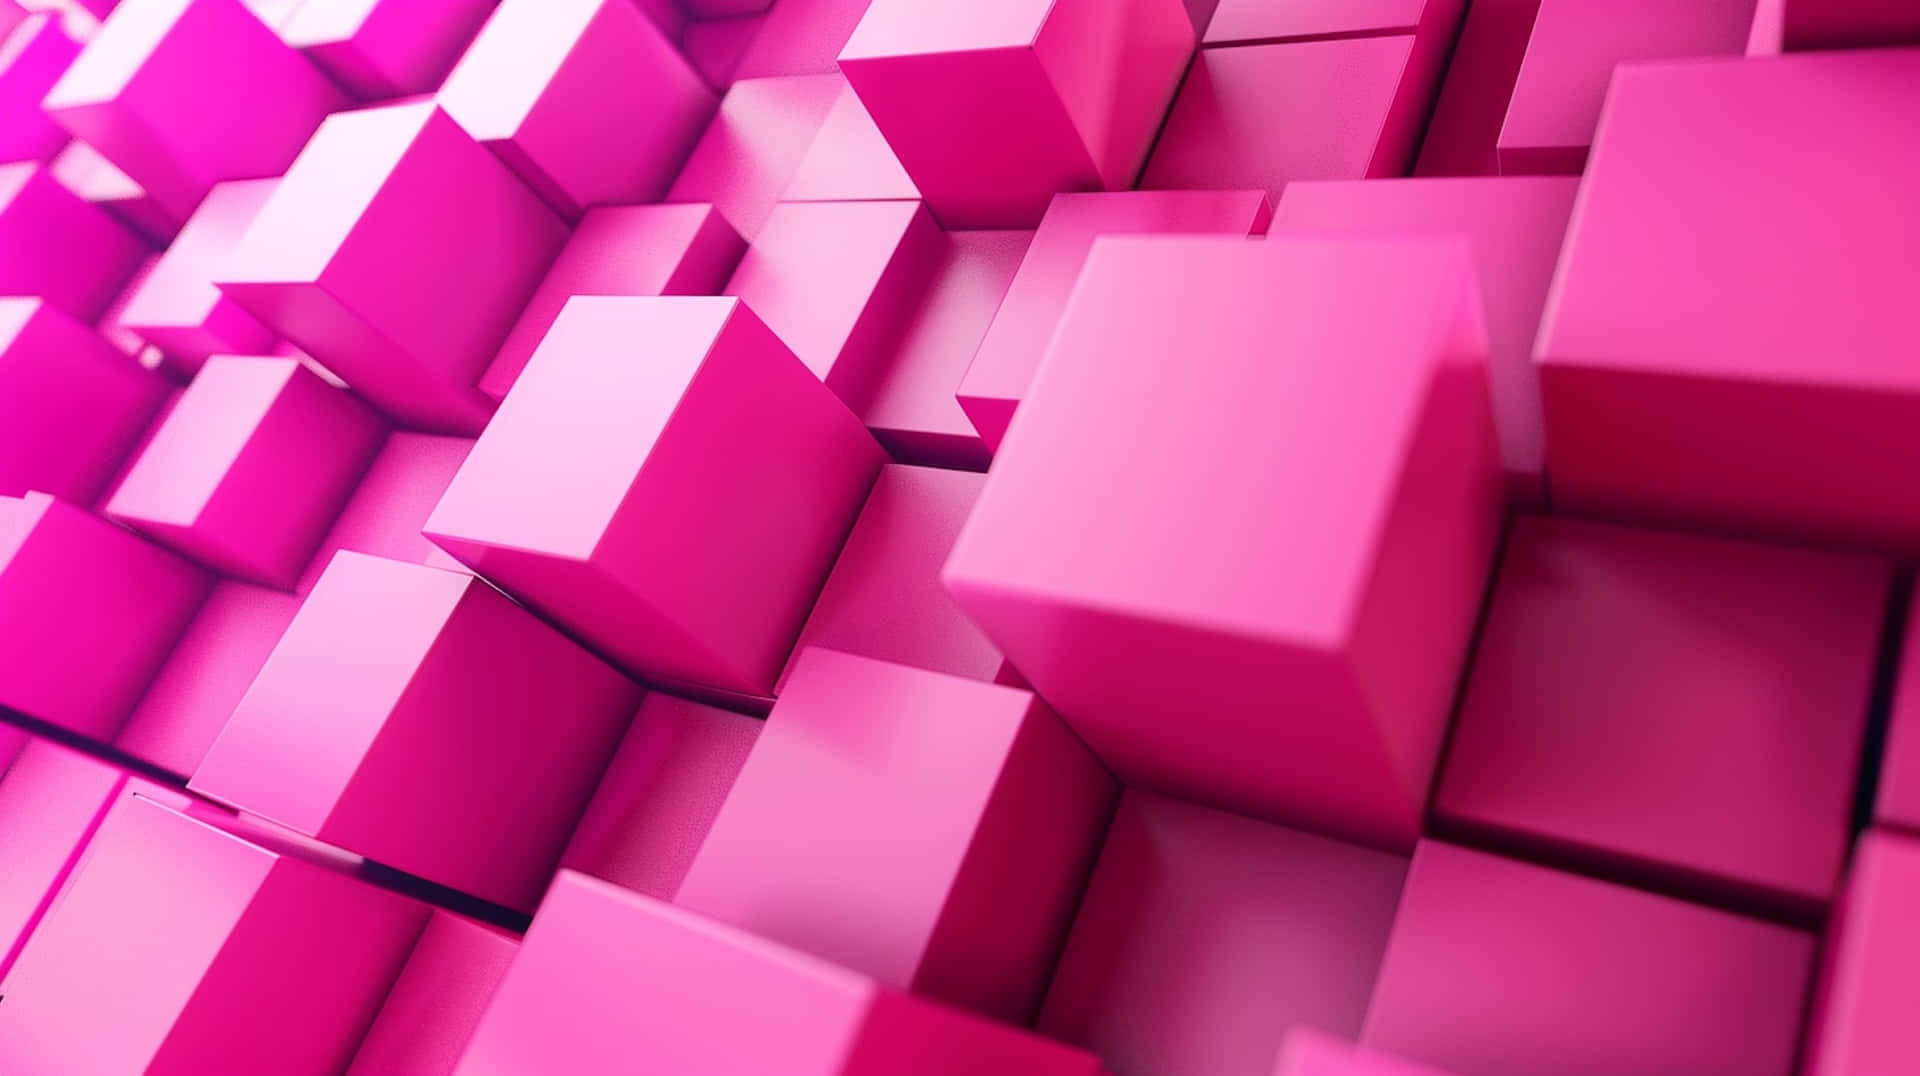 Pink3 D Cubes Abstract Pattern Wallpaper